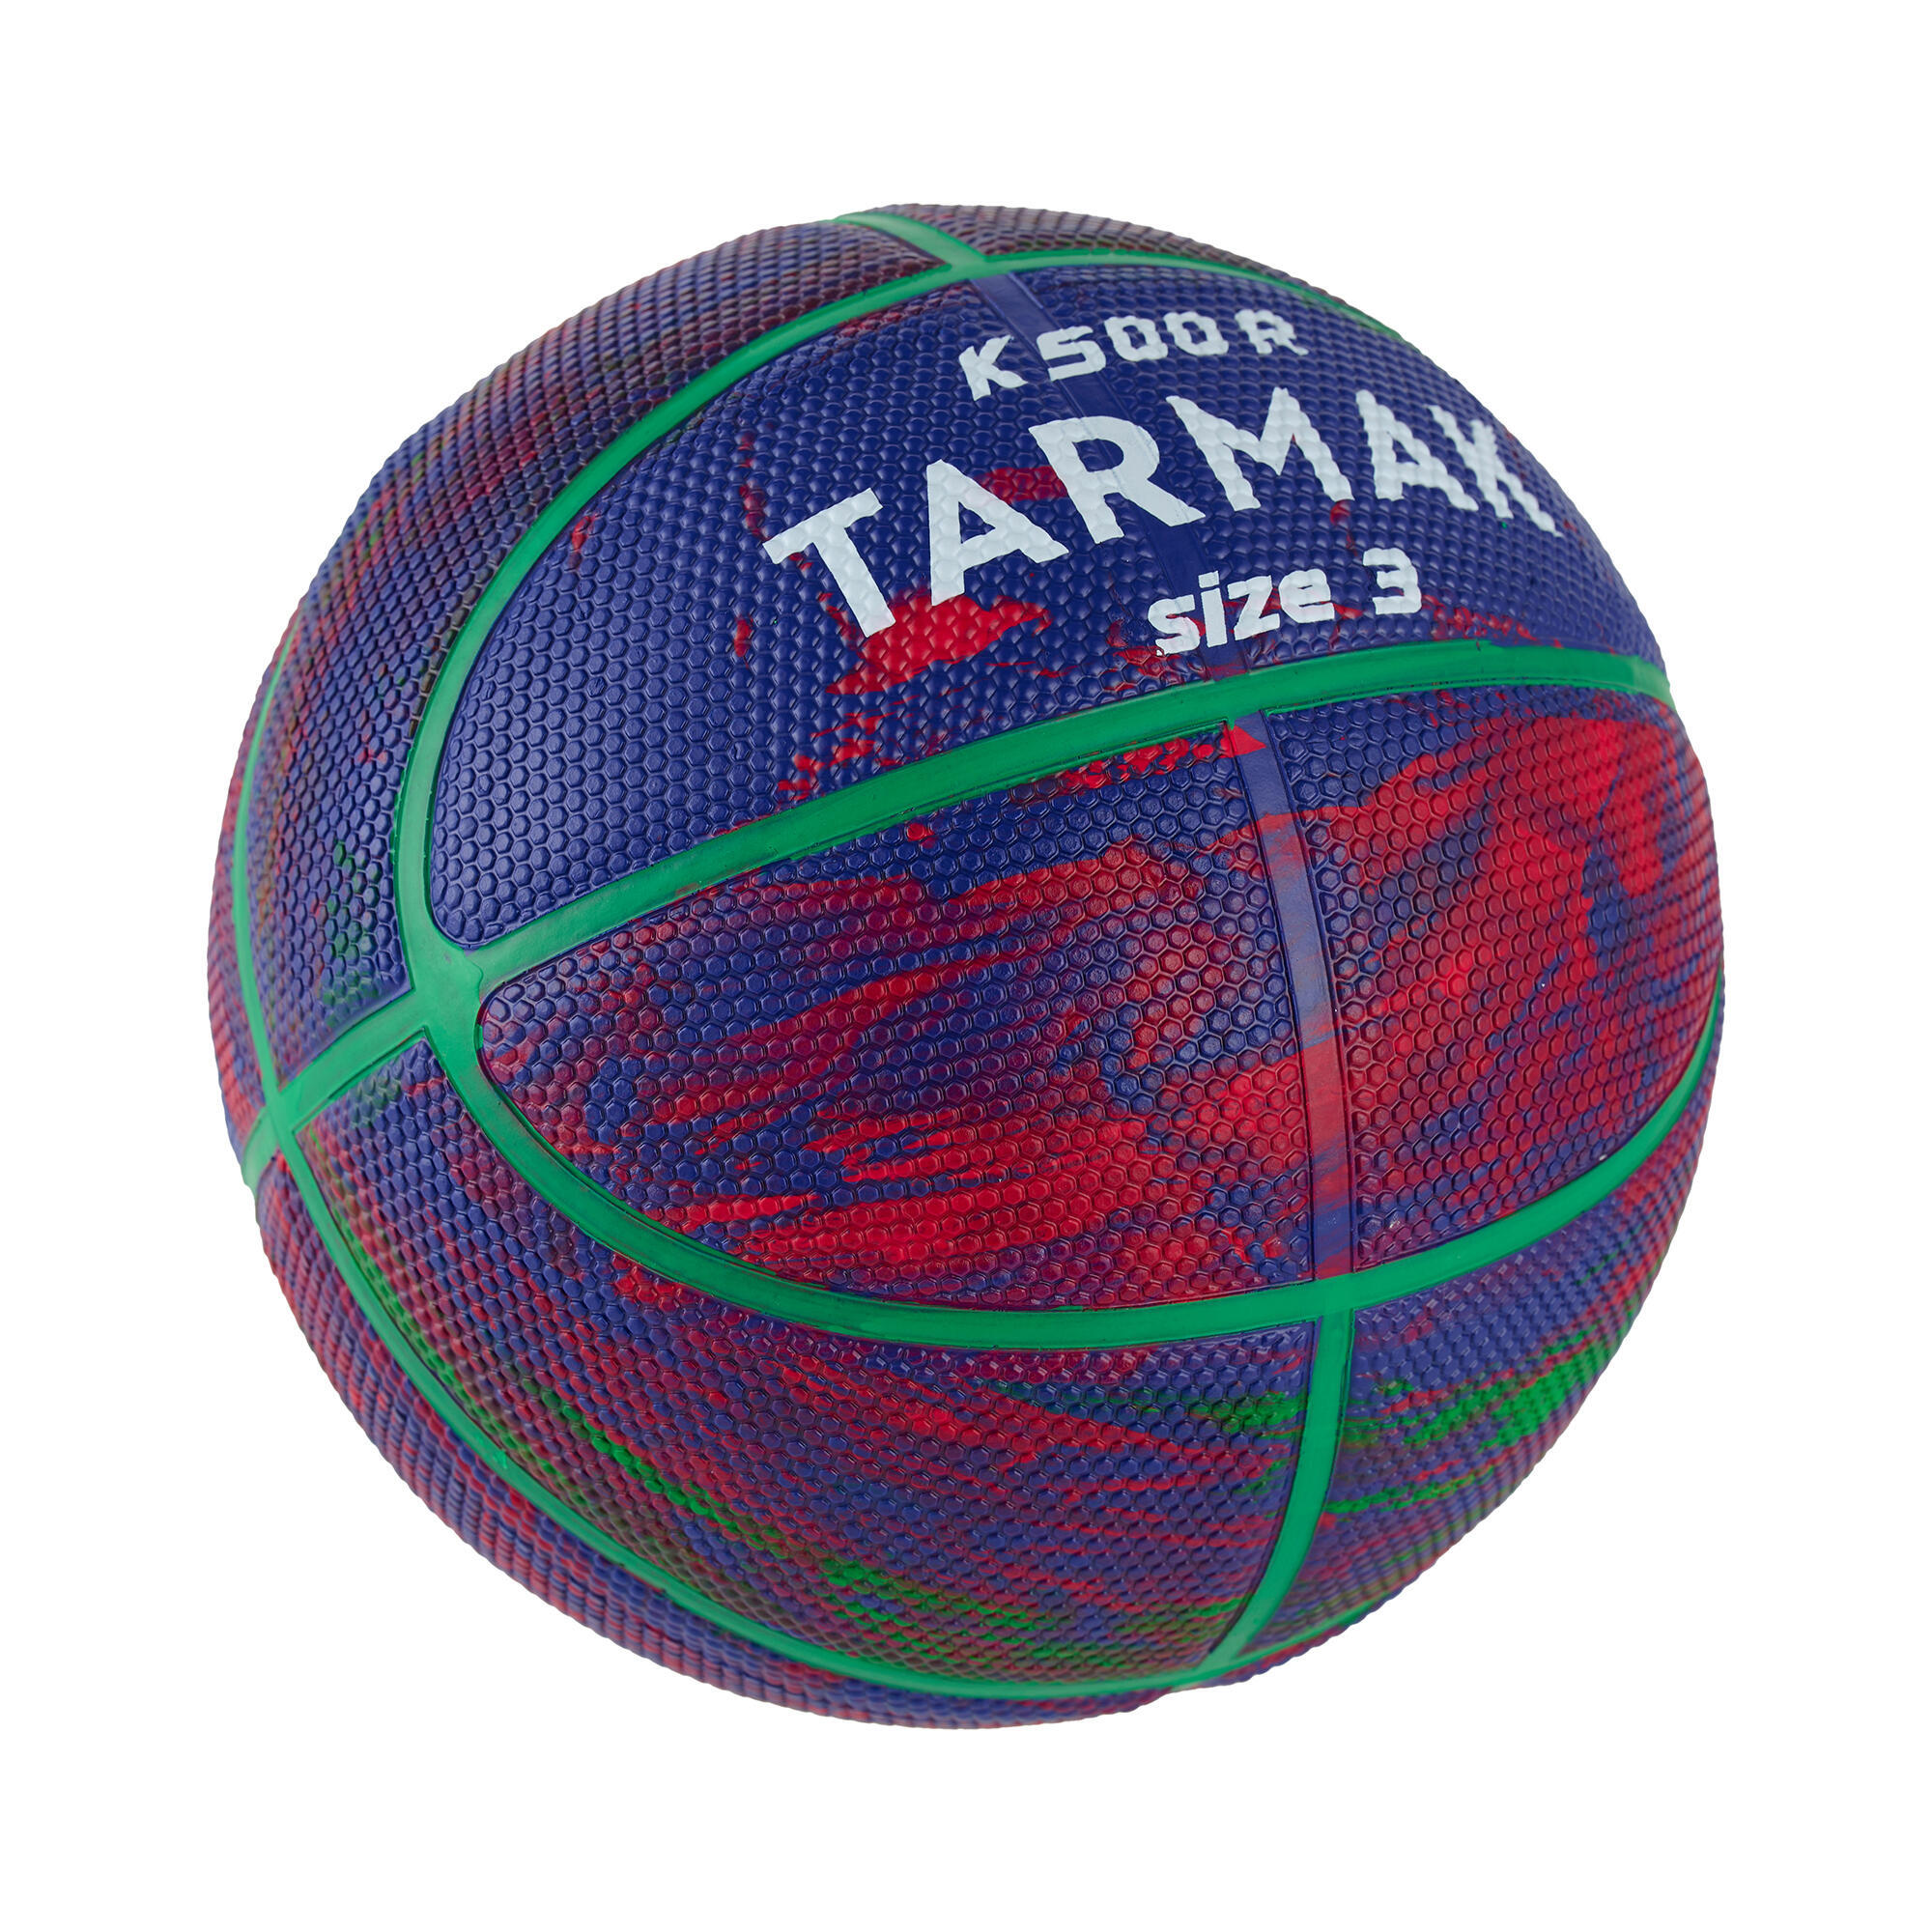 Kids' Rubber Basketball Size 3 K500 - Blue/Red 2/5